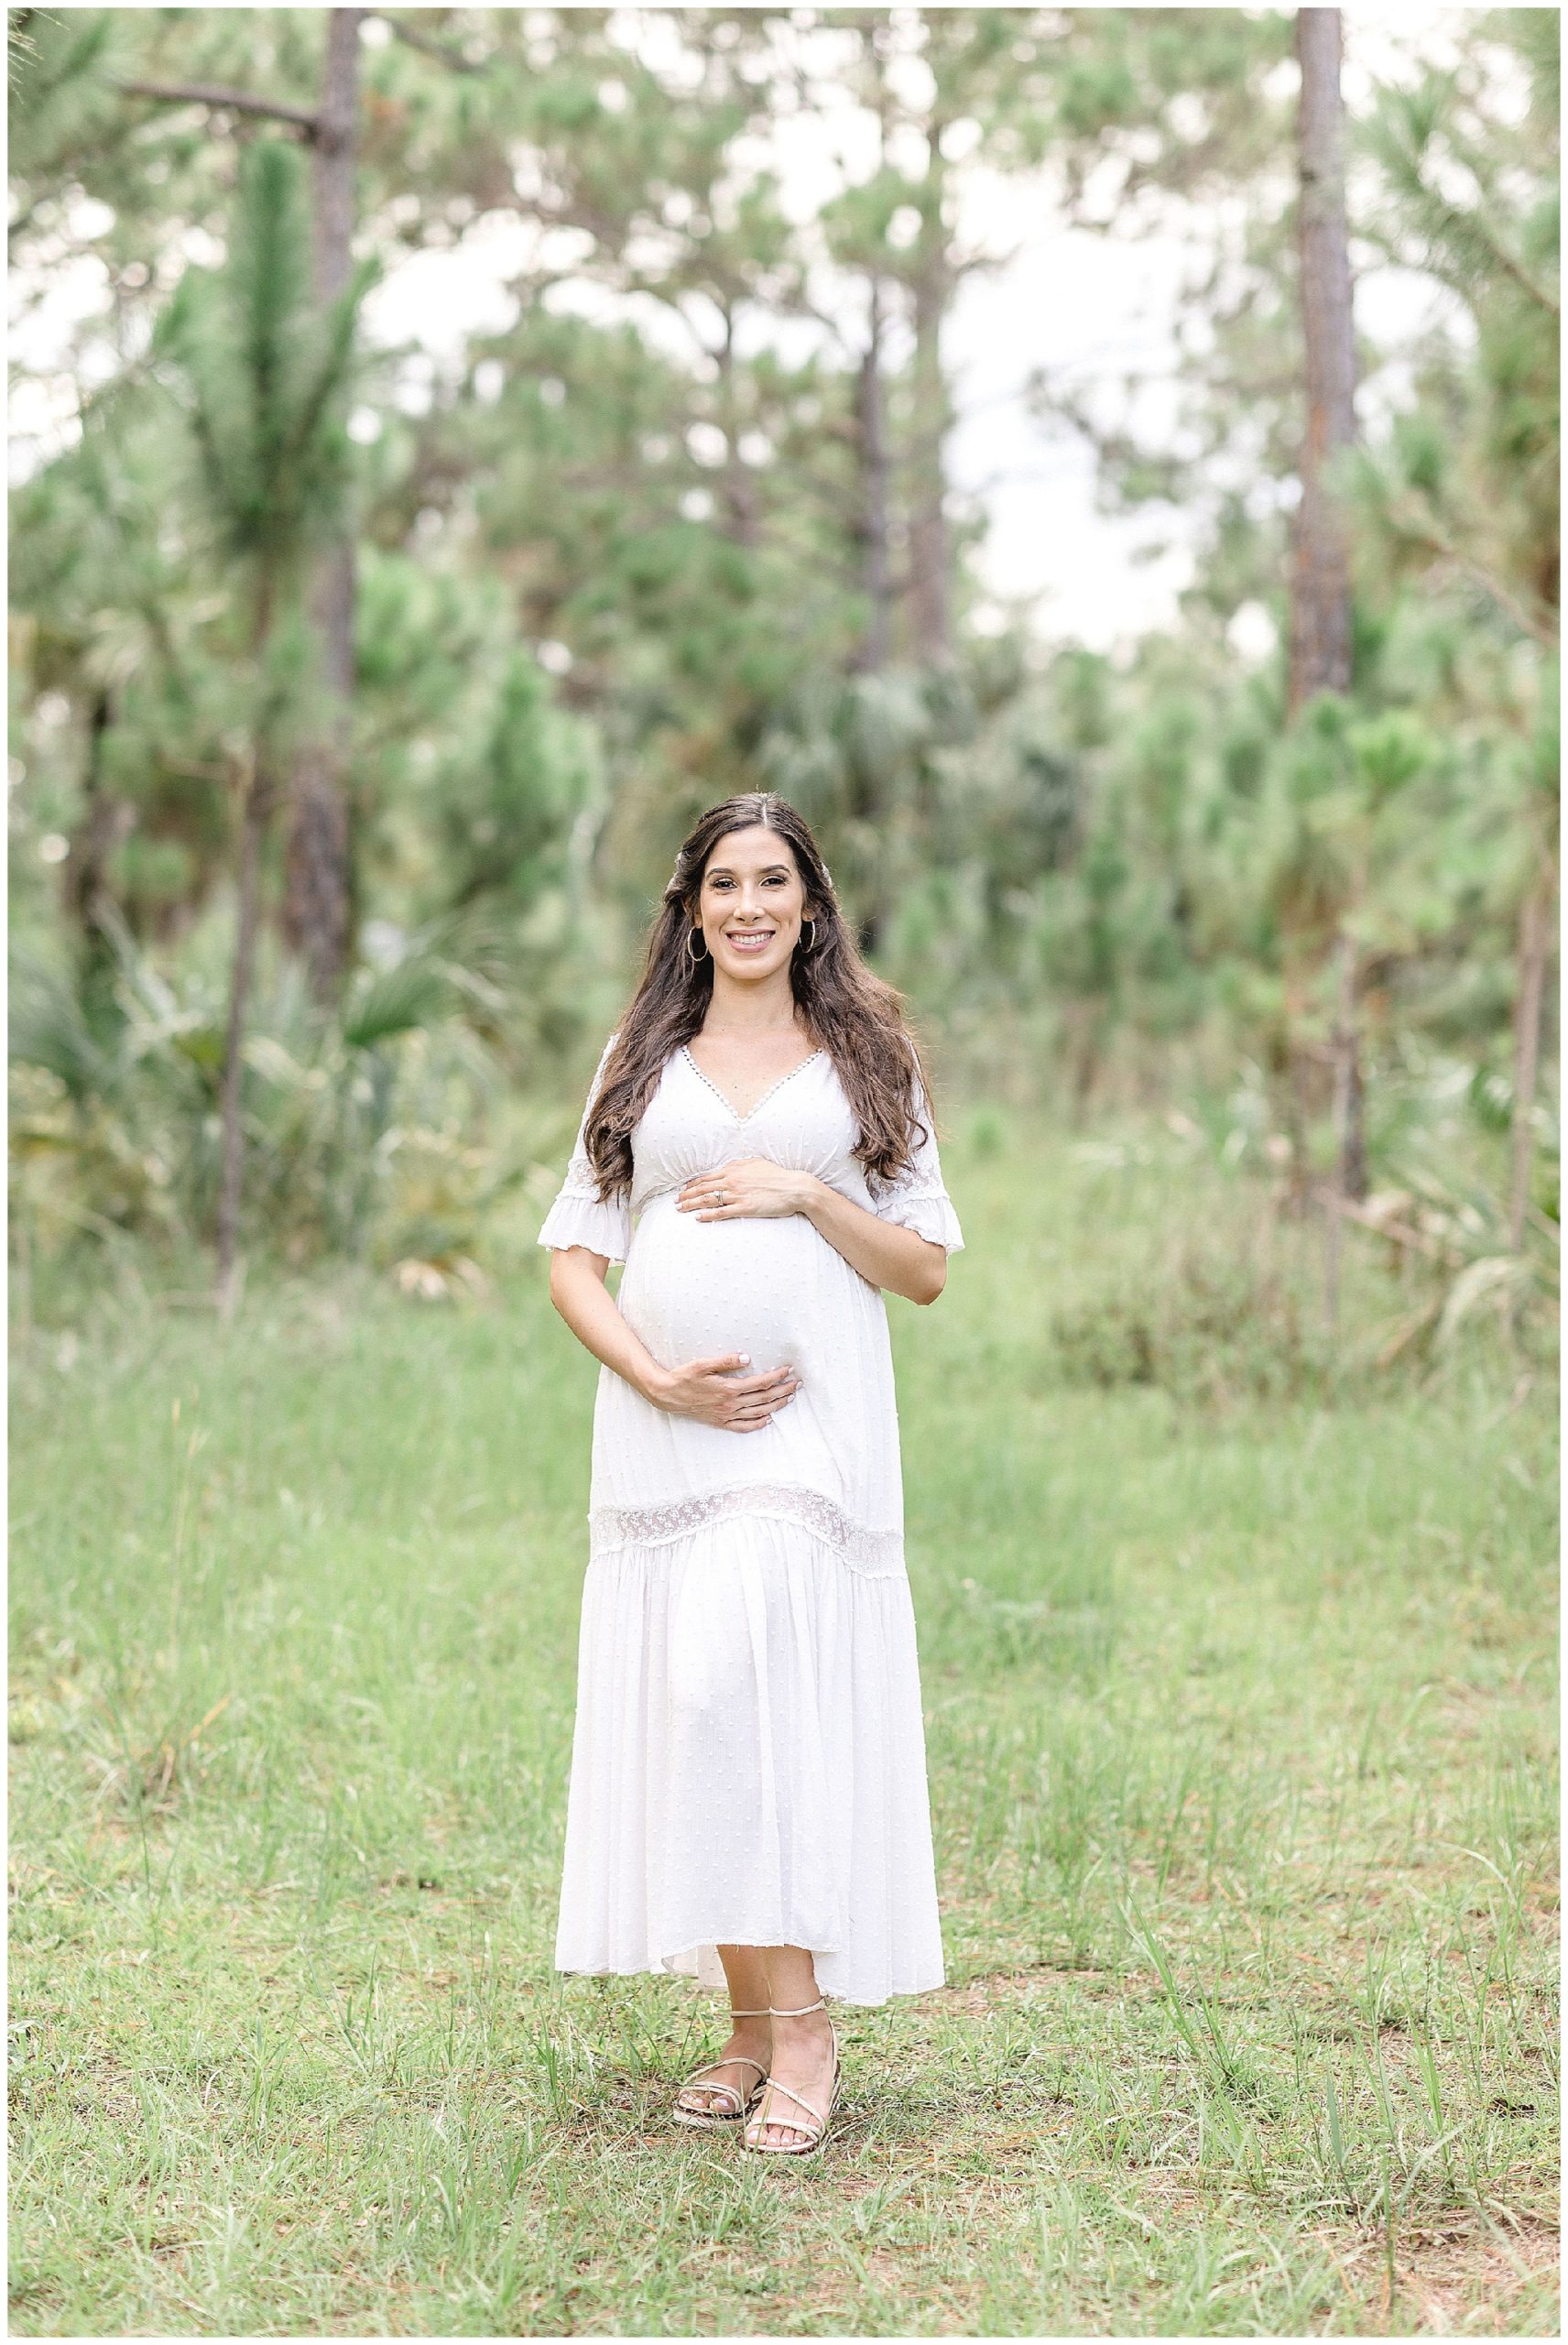 Maternity photos in South Florida. Photos by Ivanna Vidal Photography.